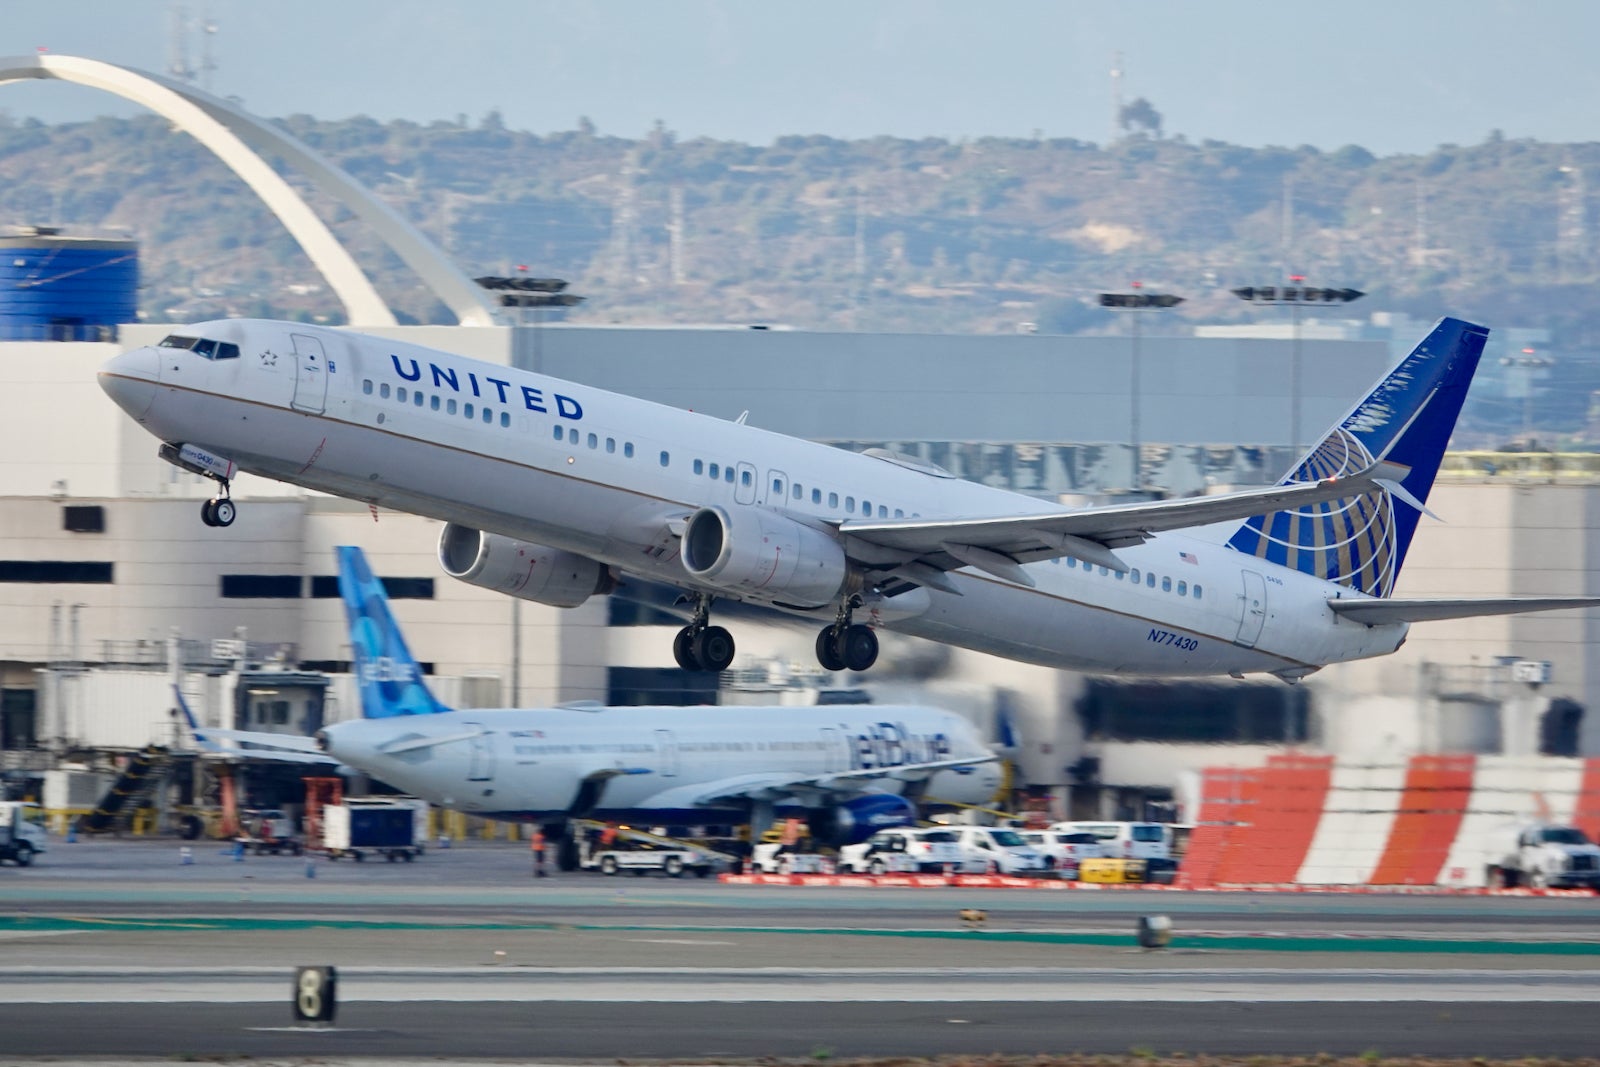 United Boeing 737 Takeoff